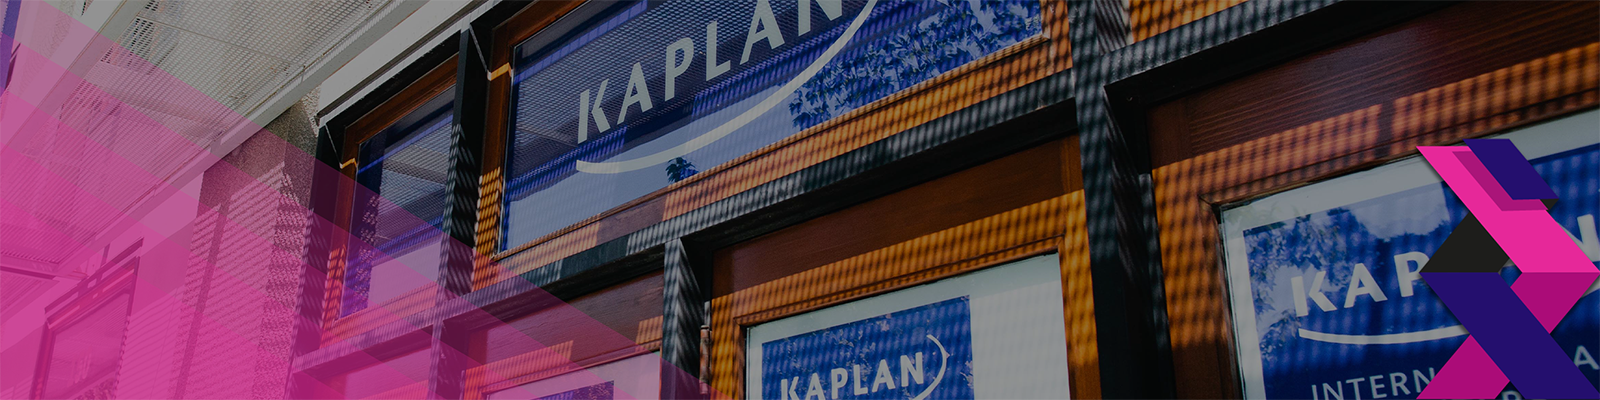 Kaplan International Languages - Edinburgh görseli